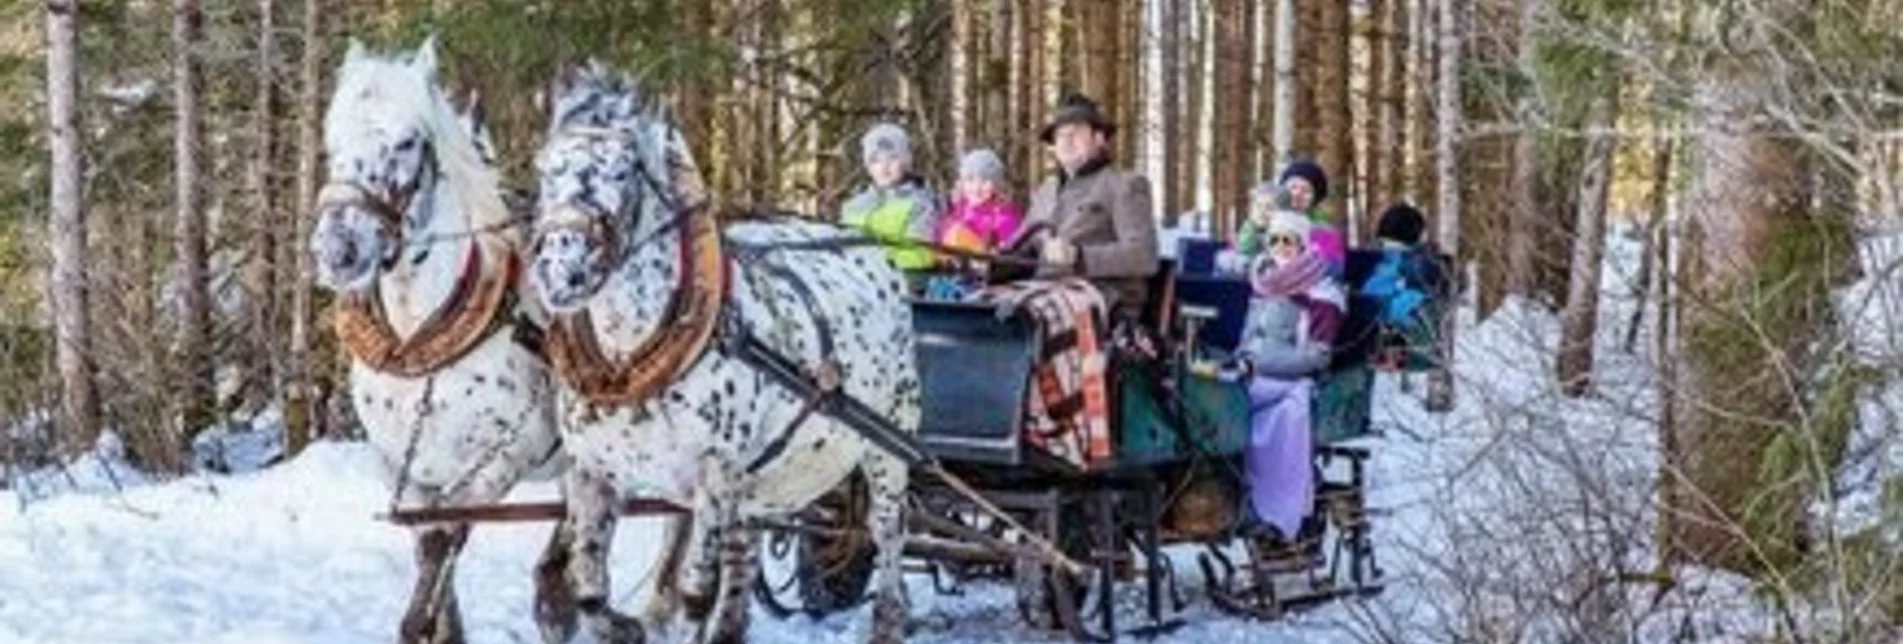 Horse Carriage Ride Horse-drawn sleigh rides at Pitzerhof - Touren-Impression #1